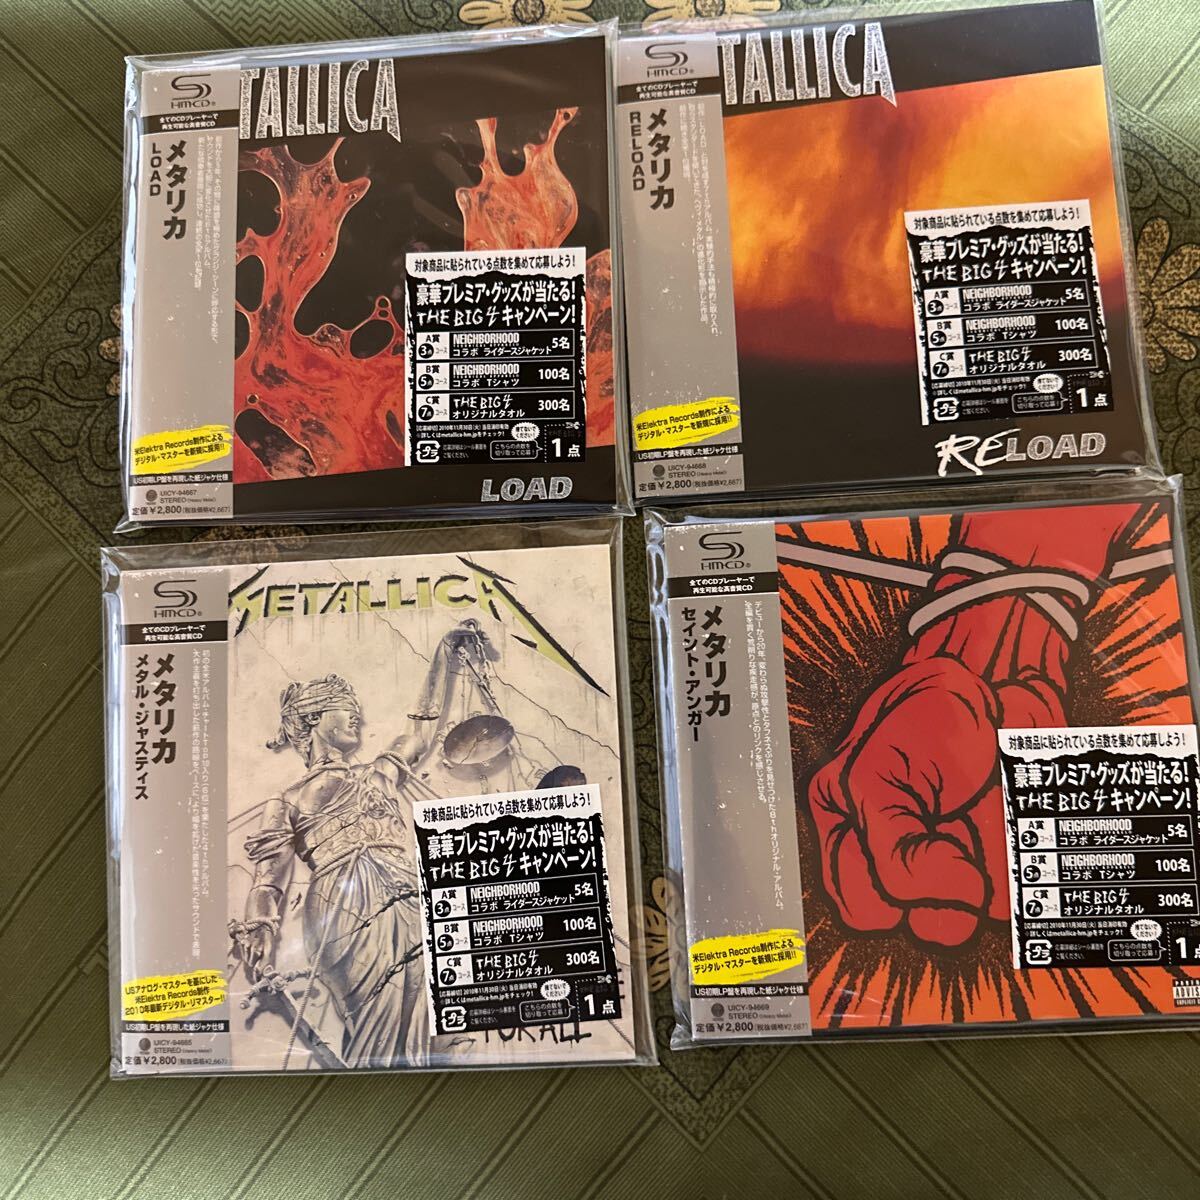 [SHM-CD] Metallica 4 позиций комплект /LOAD,RELOAD, metal * Justy s,se in to* Anne ga-( бумага жакет specification ) Metallica 